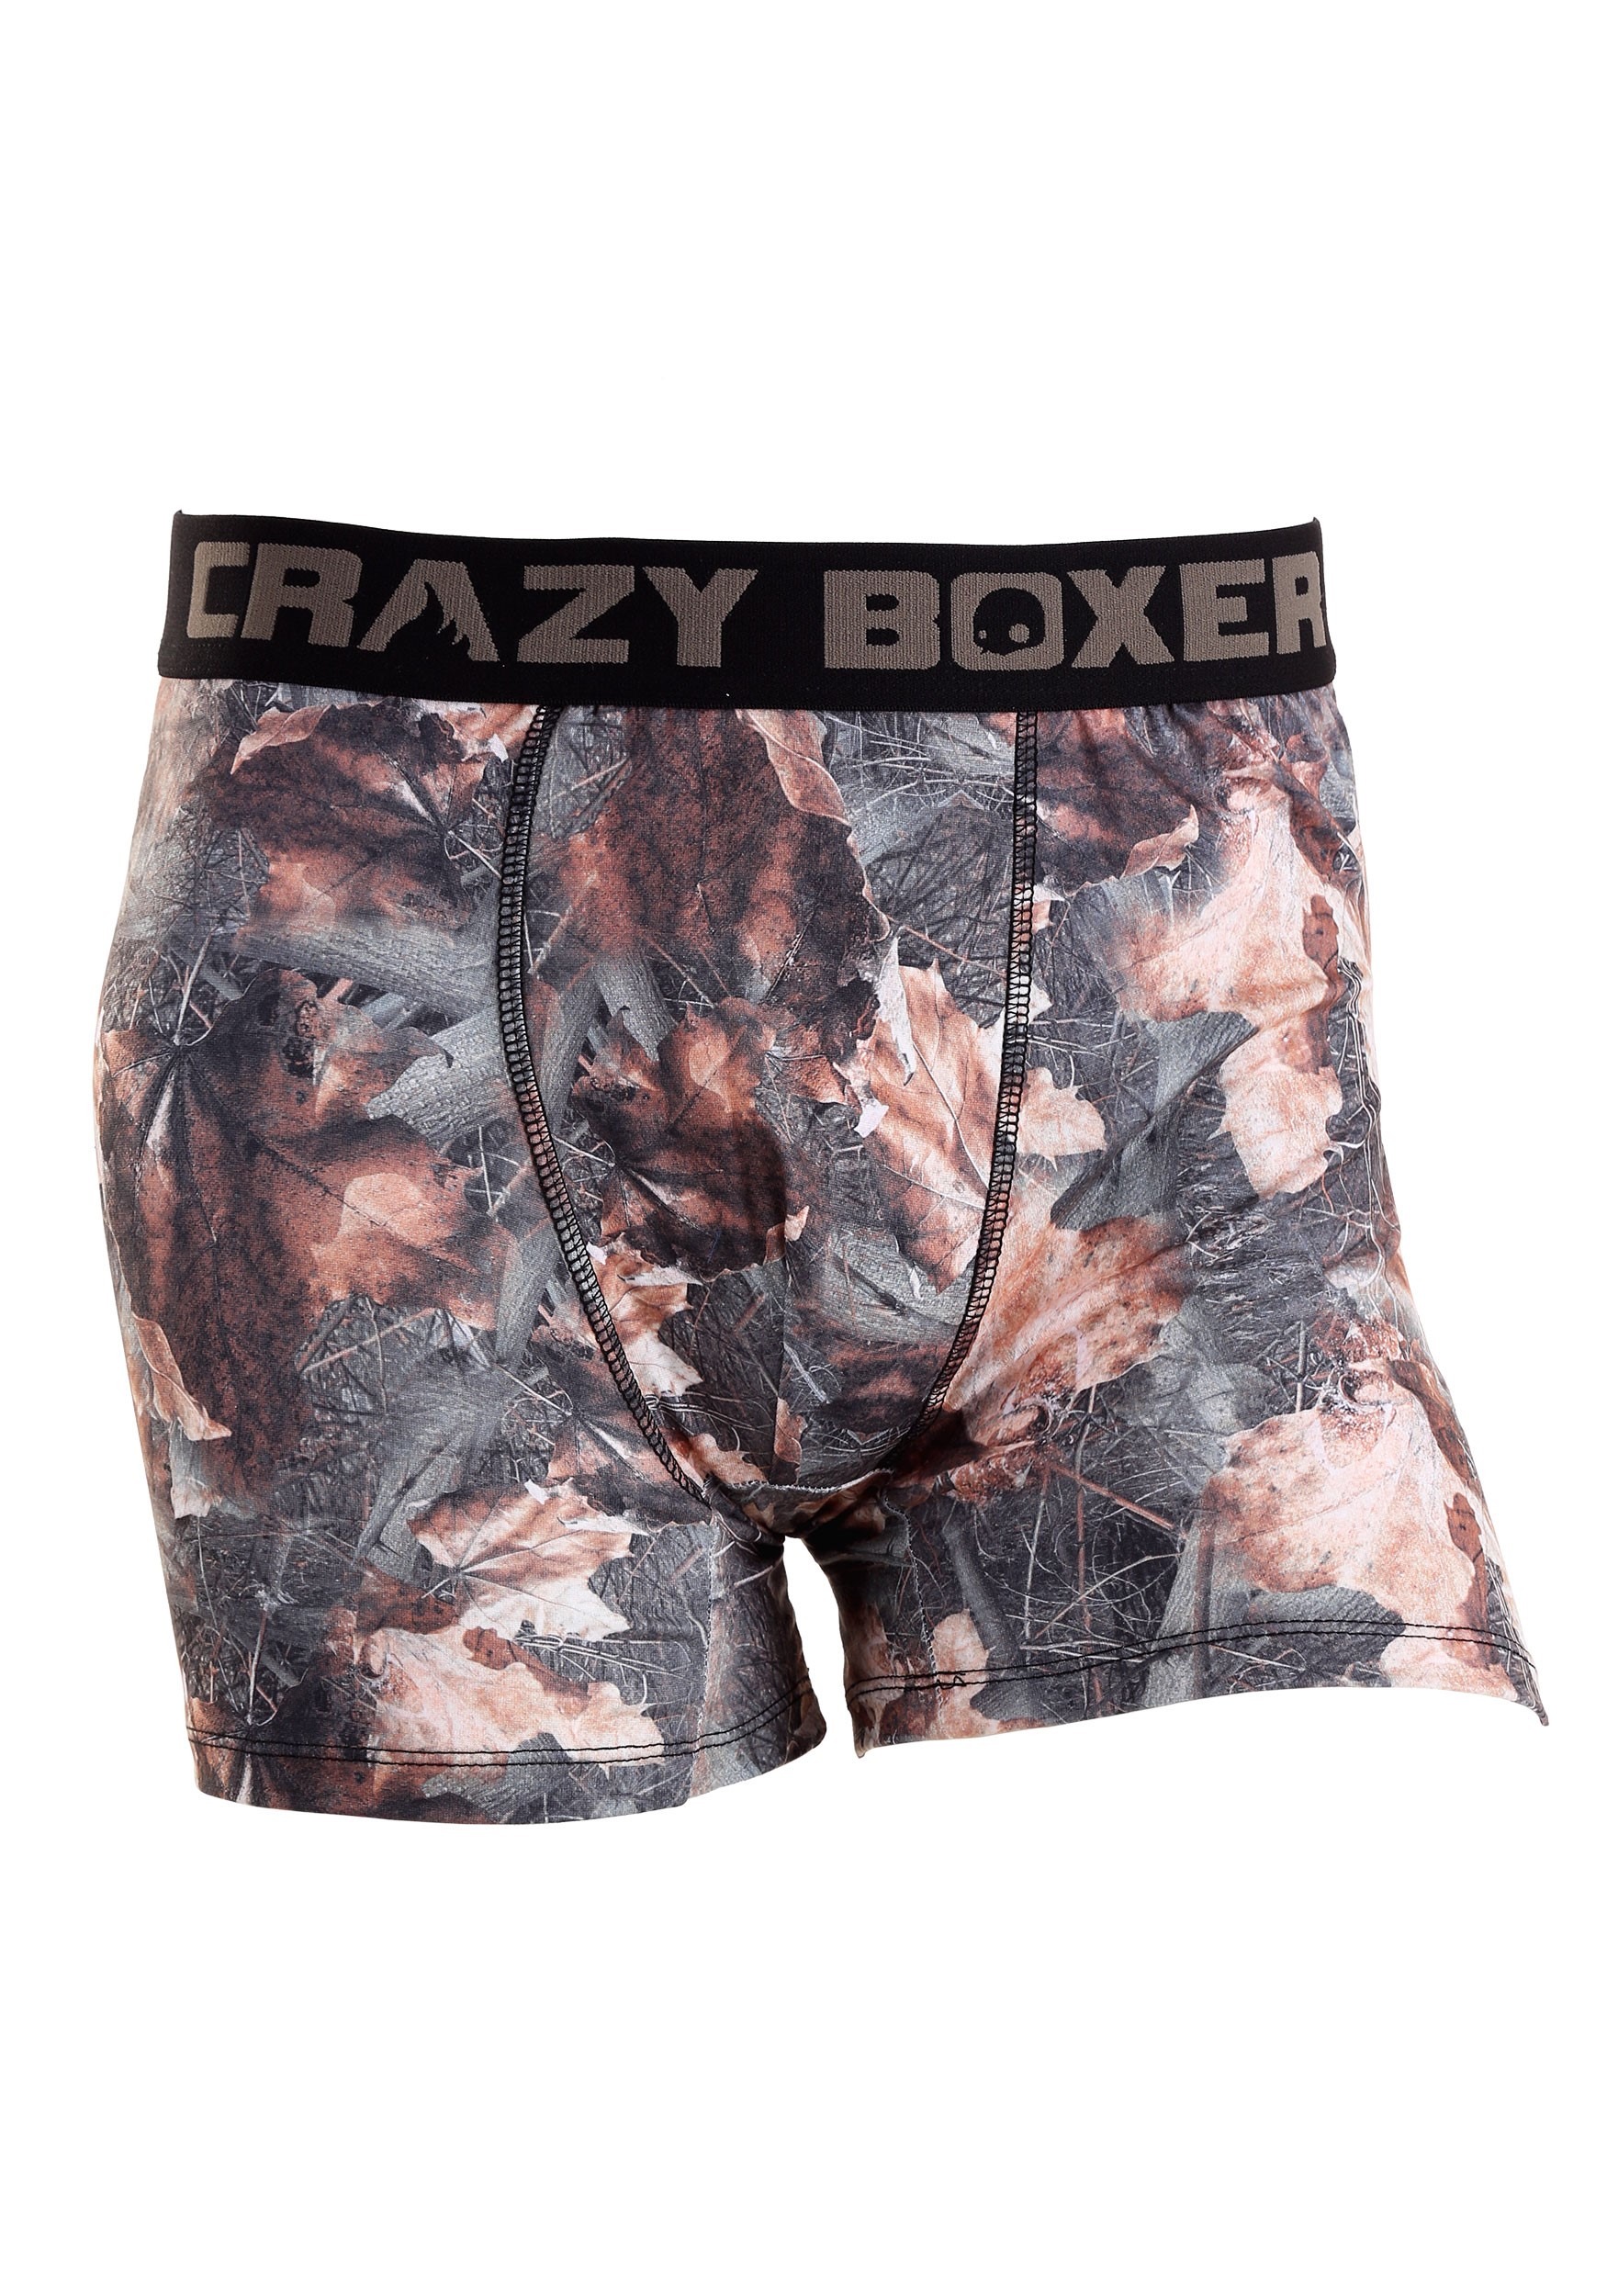 Camouflage Crazy Boxers Mens Boxers Briefs